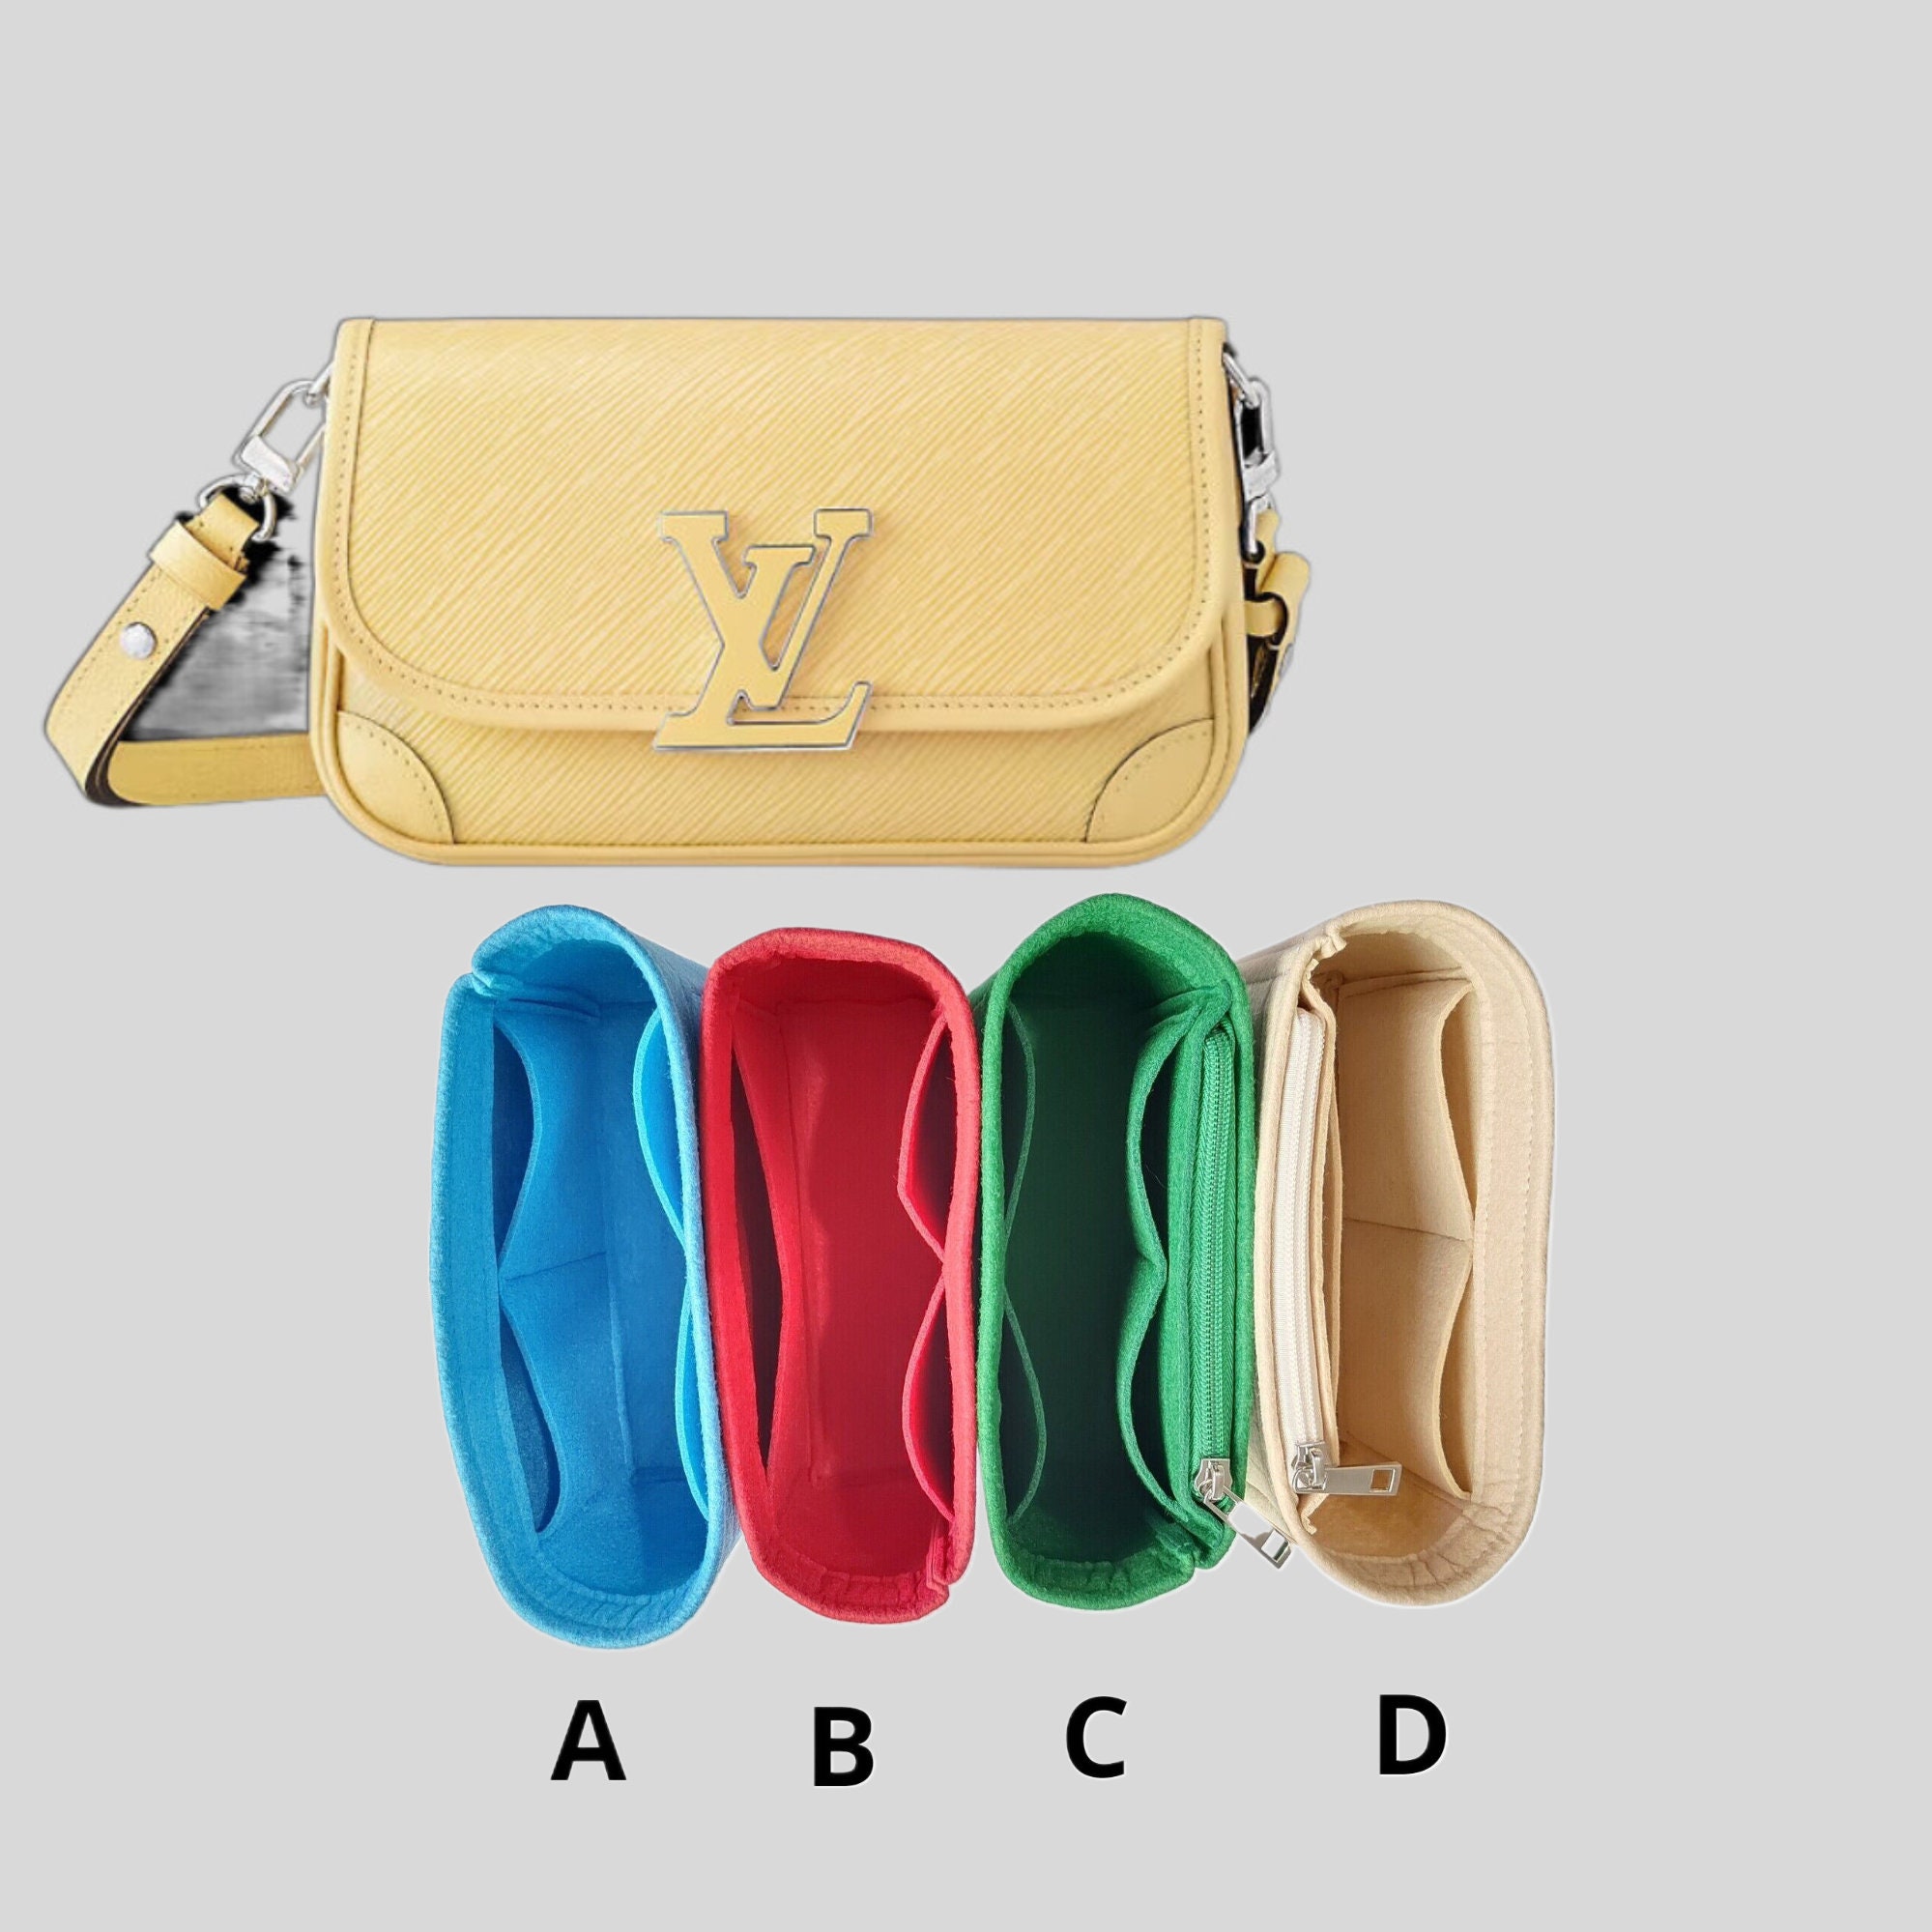 1-21/ LV-Buci) Bag Organizer for LV Buci - SAMORGA® Perfect Bag Organizer